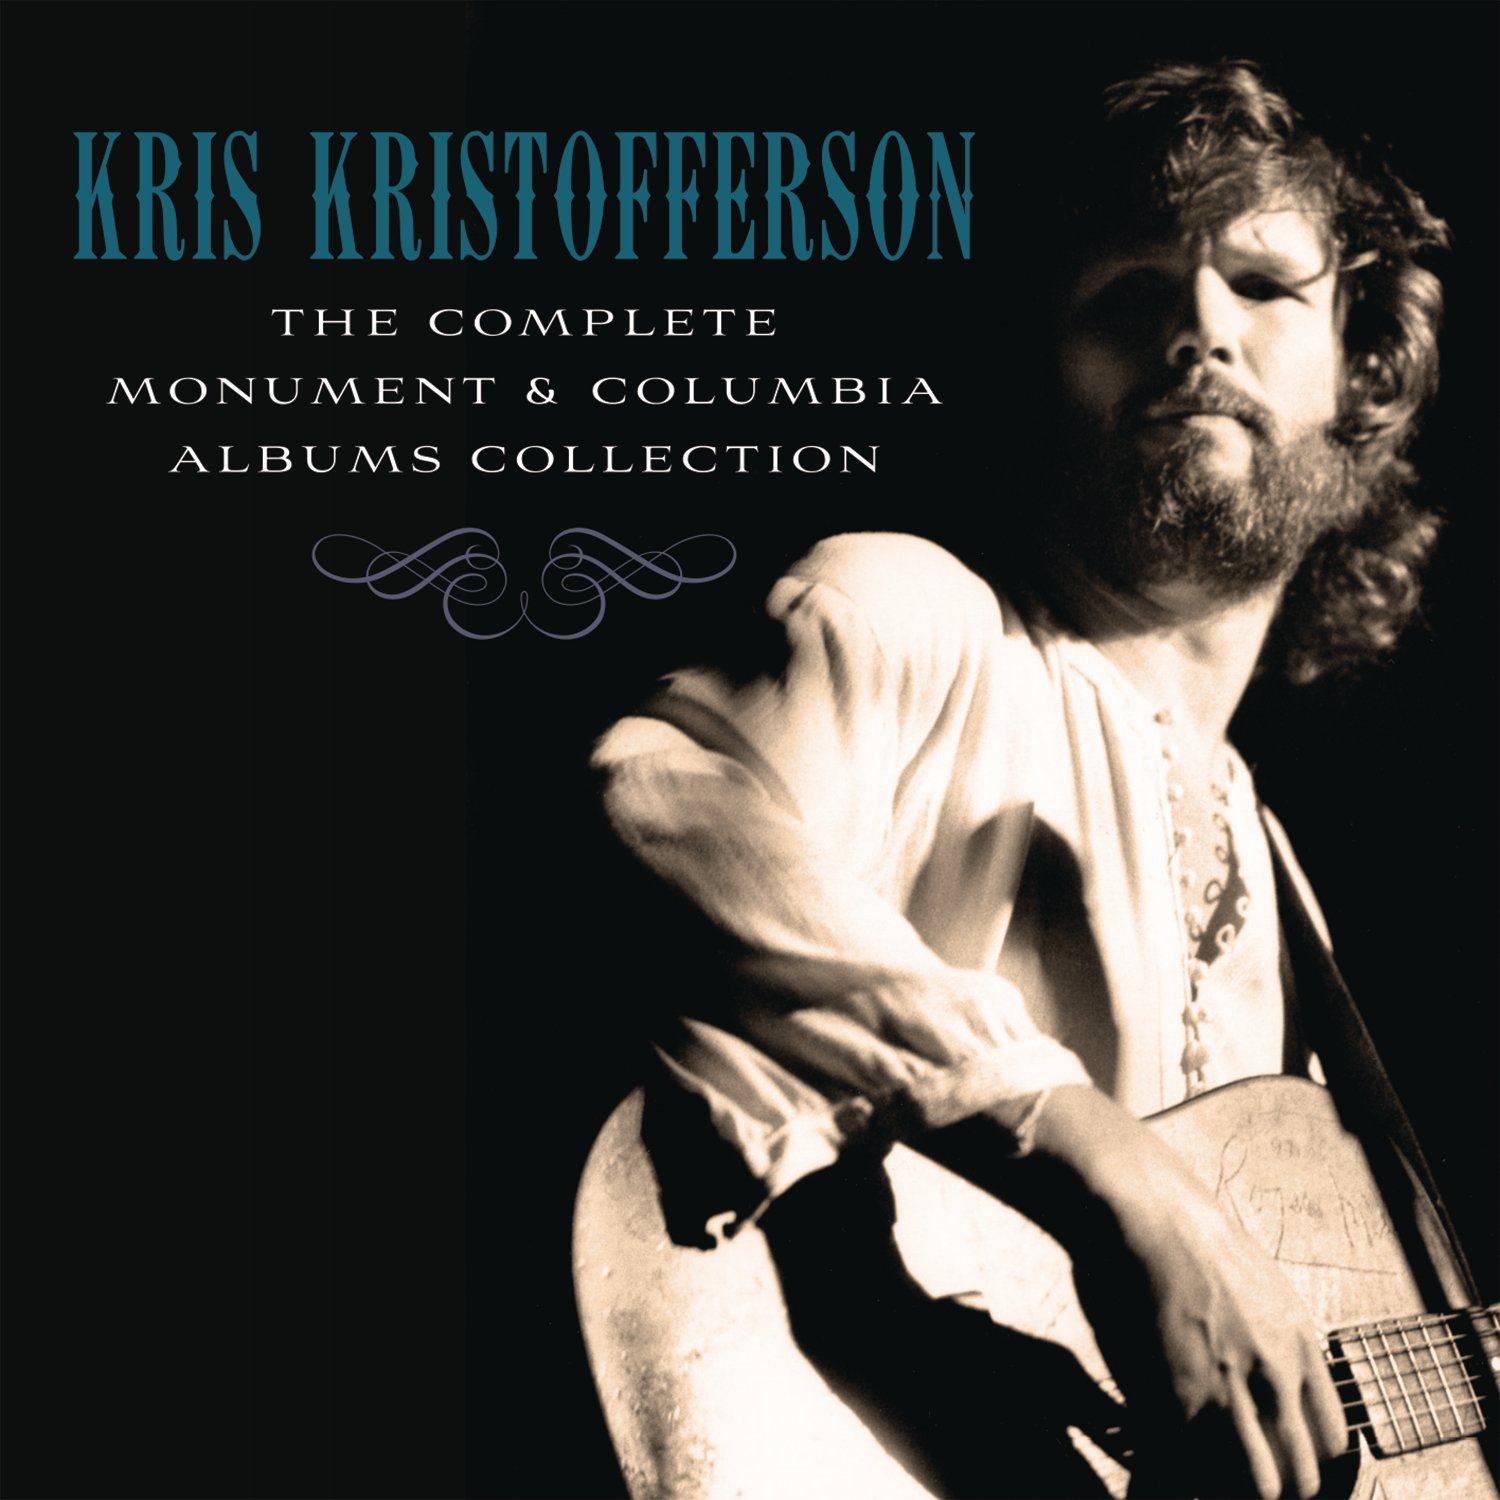 Kris Kristofferson - The Complete Monument & Columbia Albums Collection (2016) [HDTracks FLAC 24bit/96kHz]